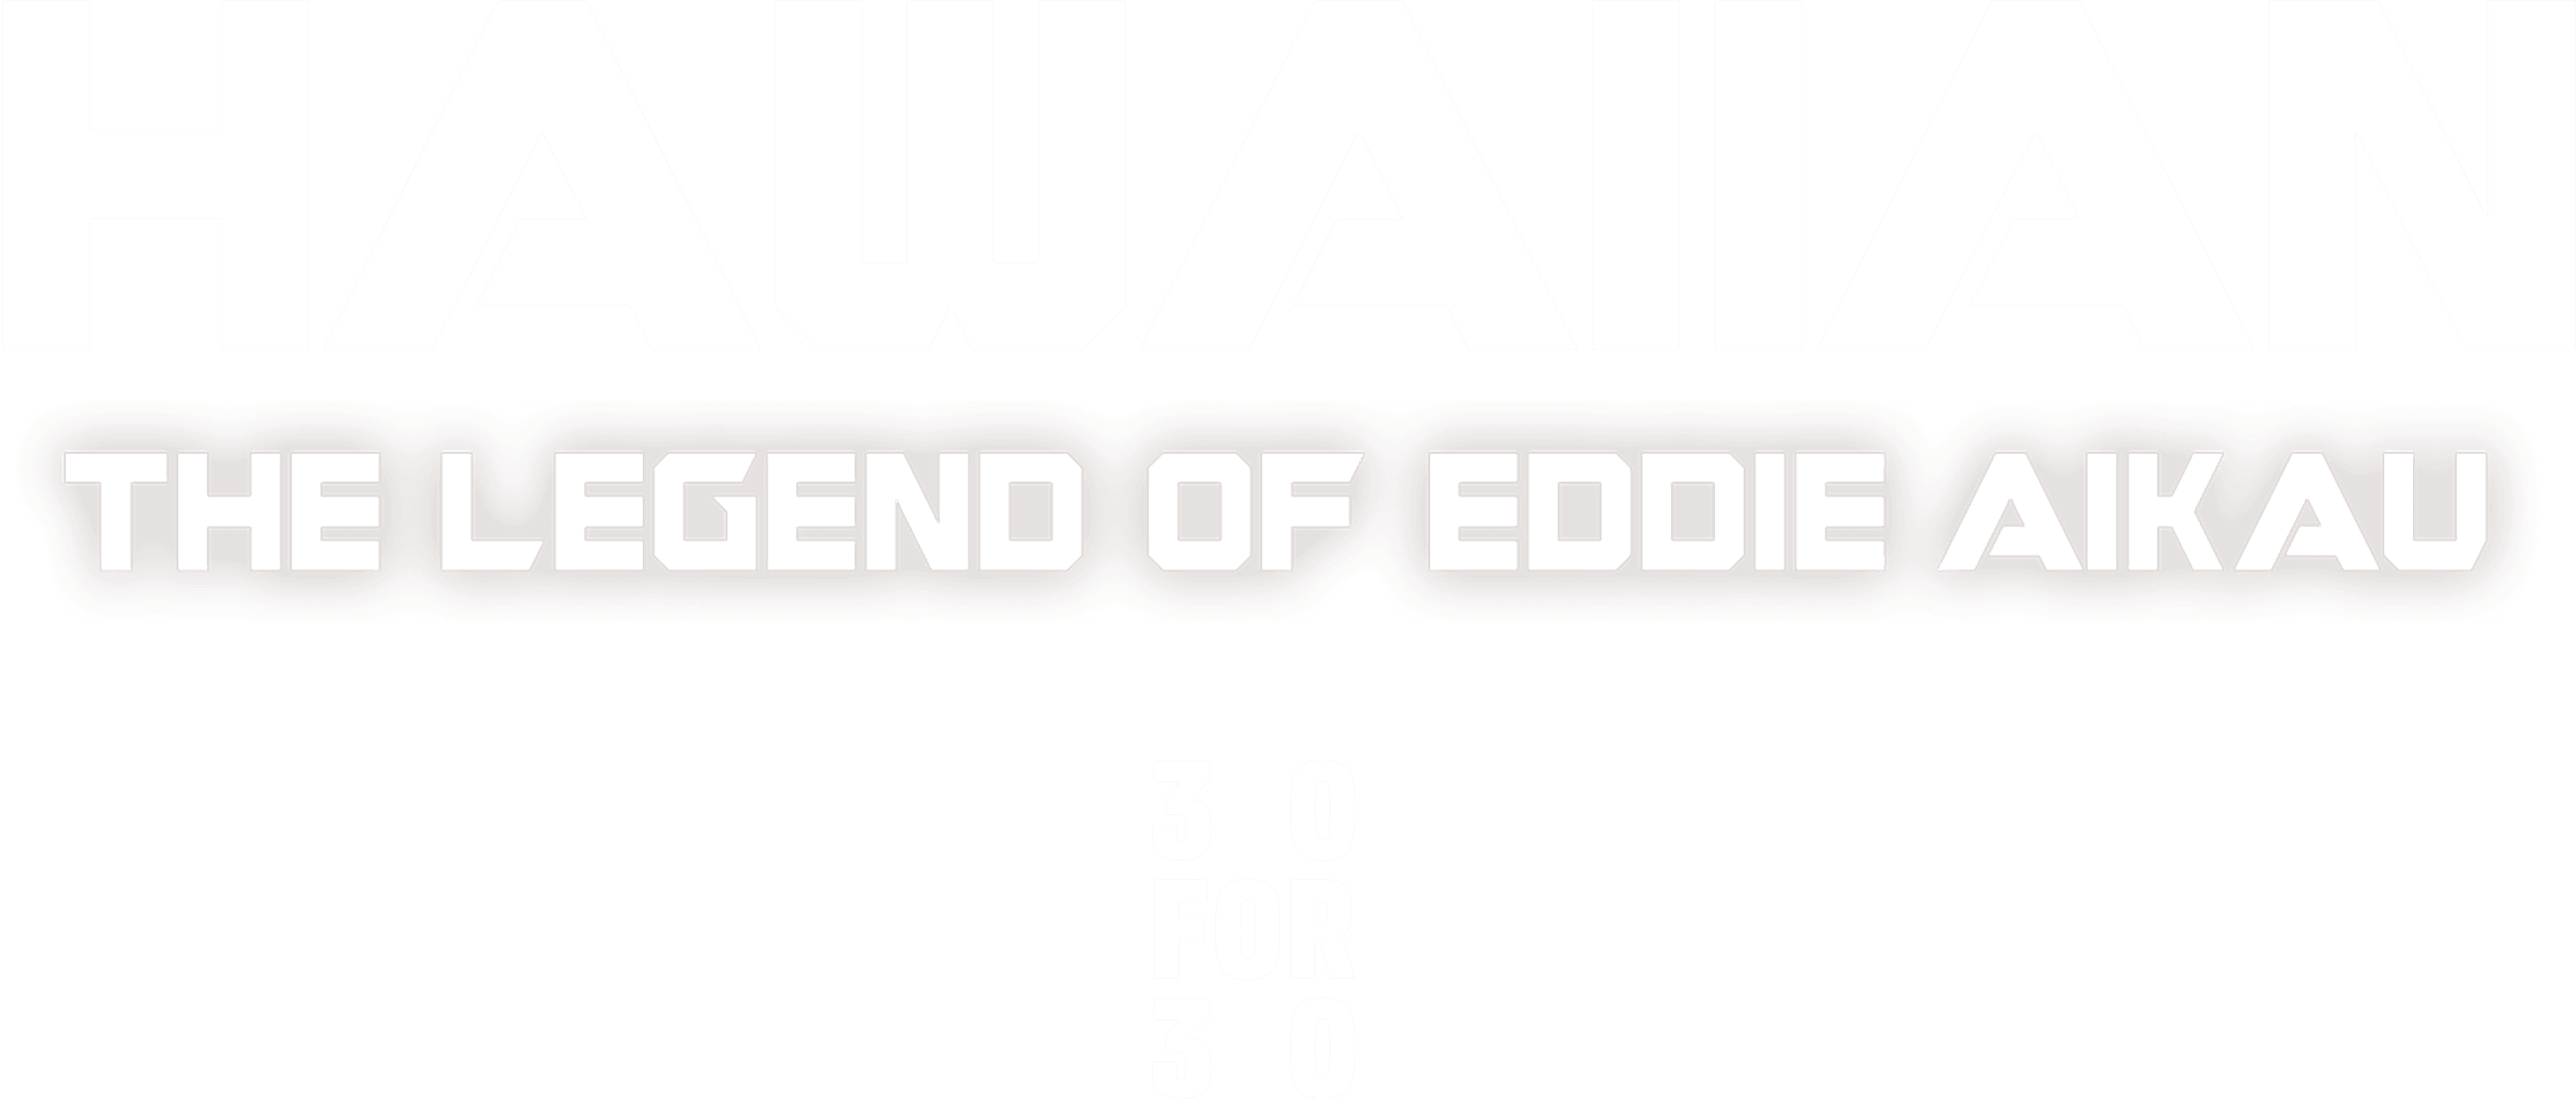 Hawaiian: The Legend of Eddie Aikau logo